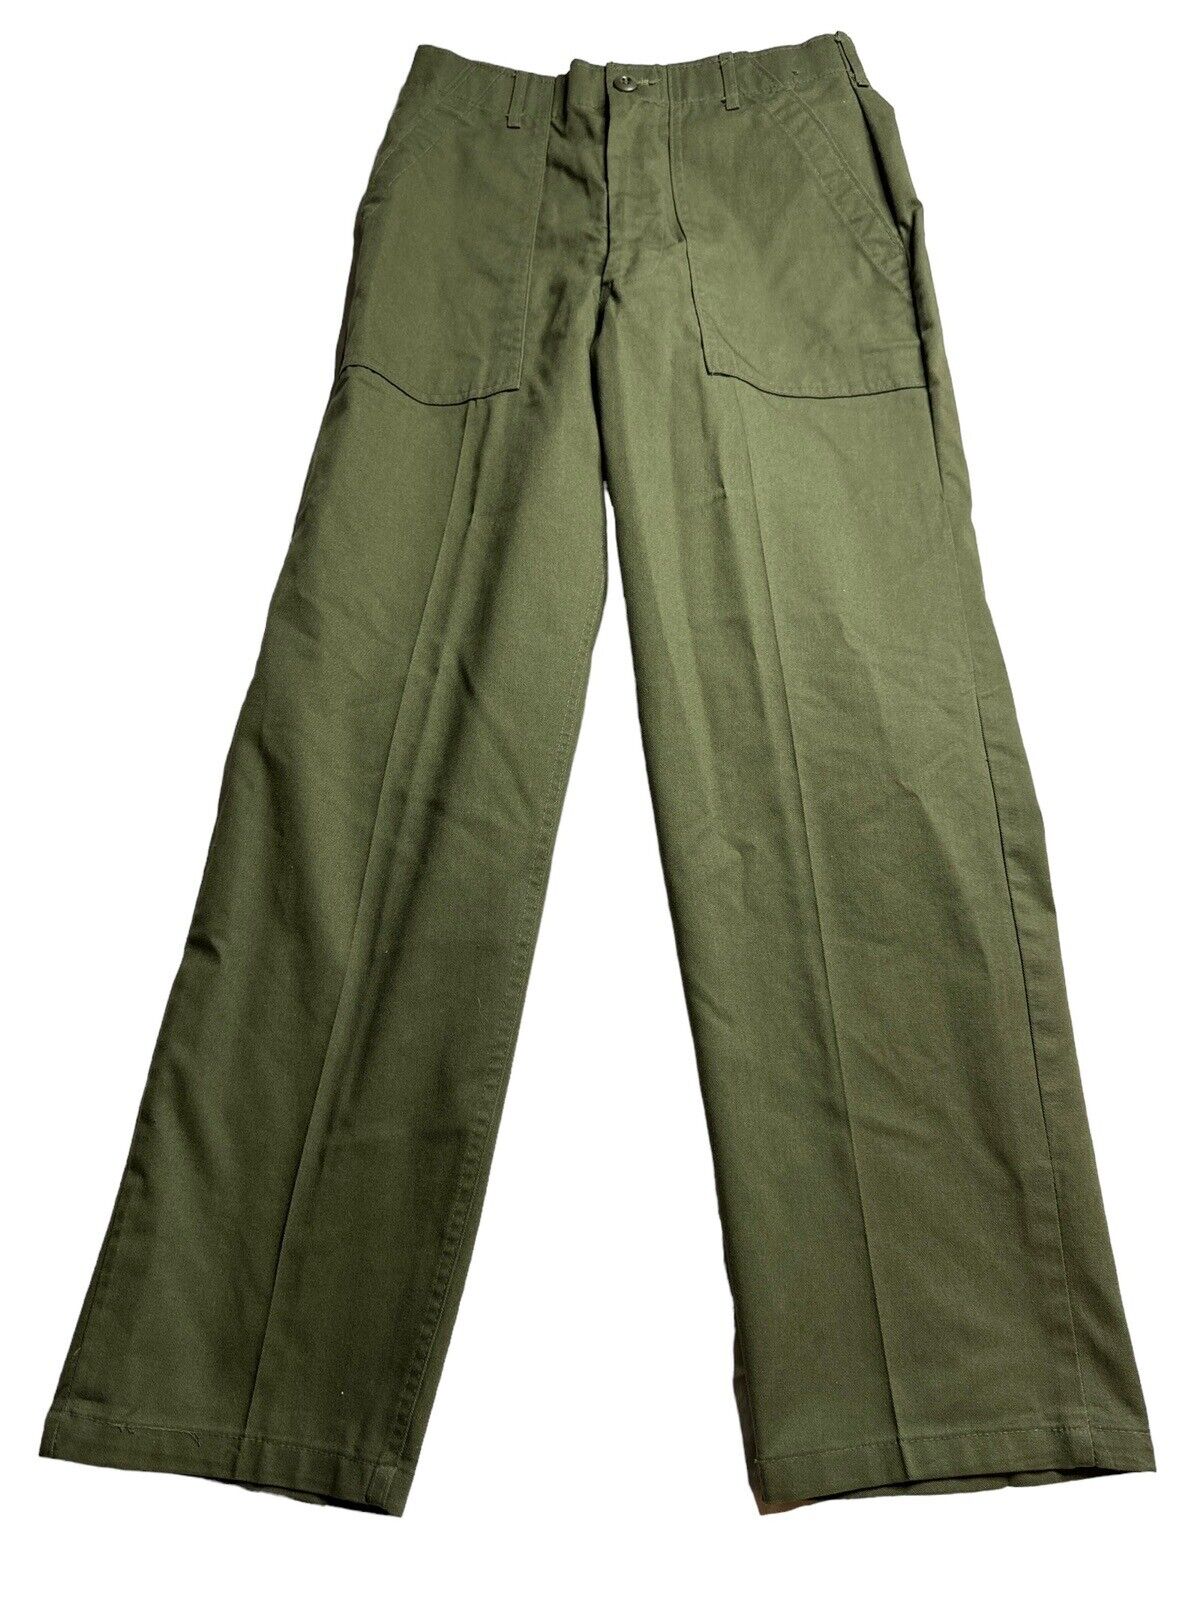 Vintage Military Pants 27x29 OG 507 80s Green Trousers Vietnam Utility